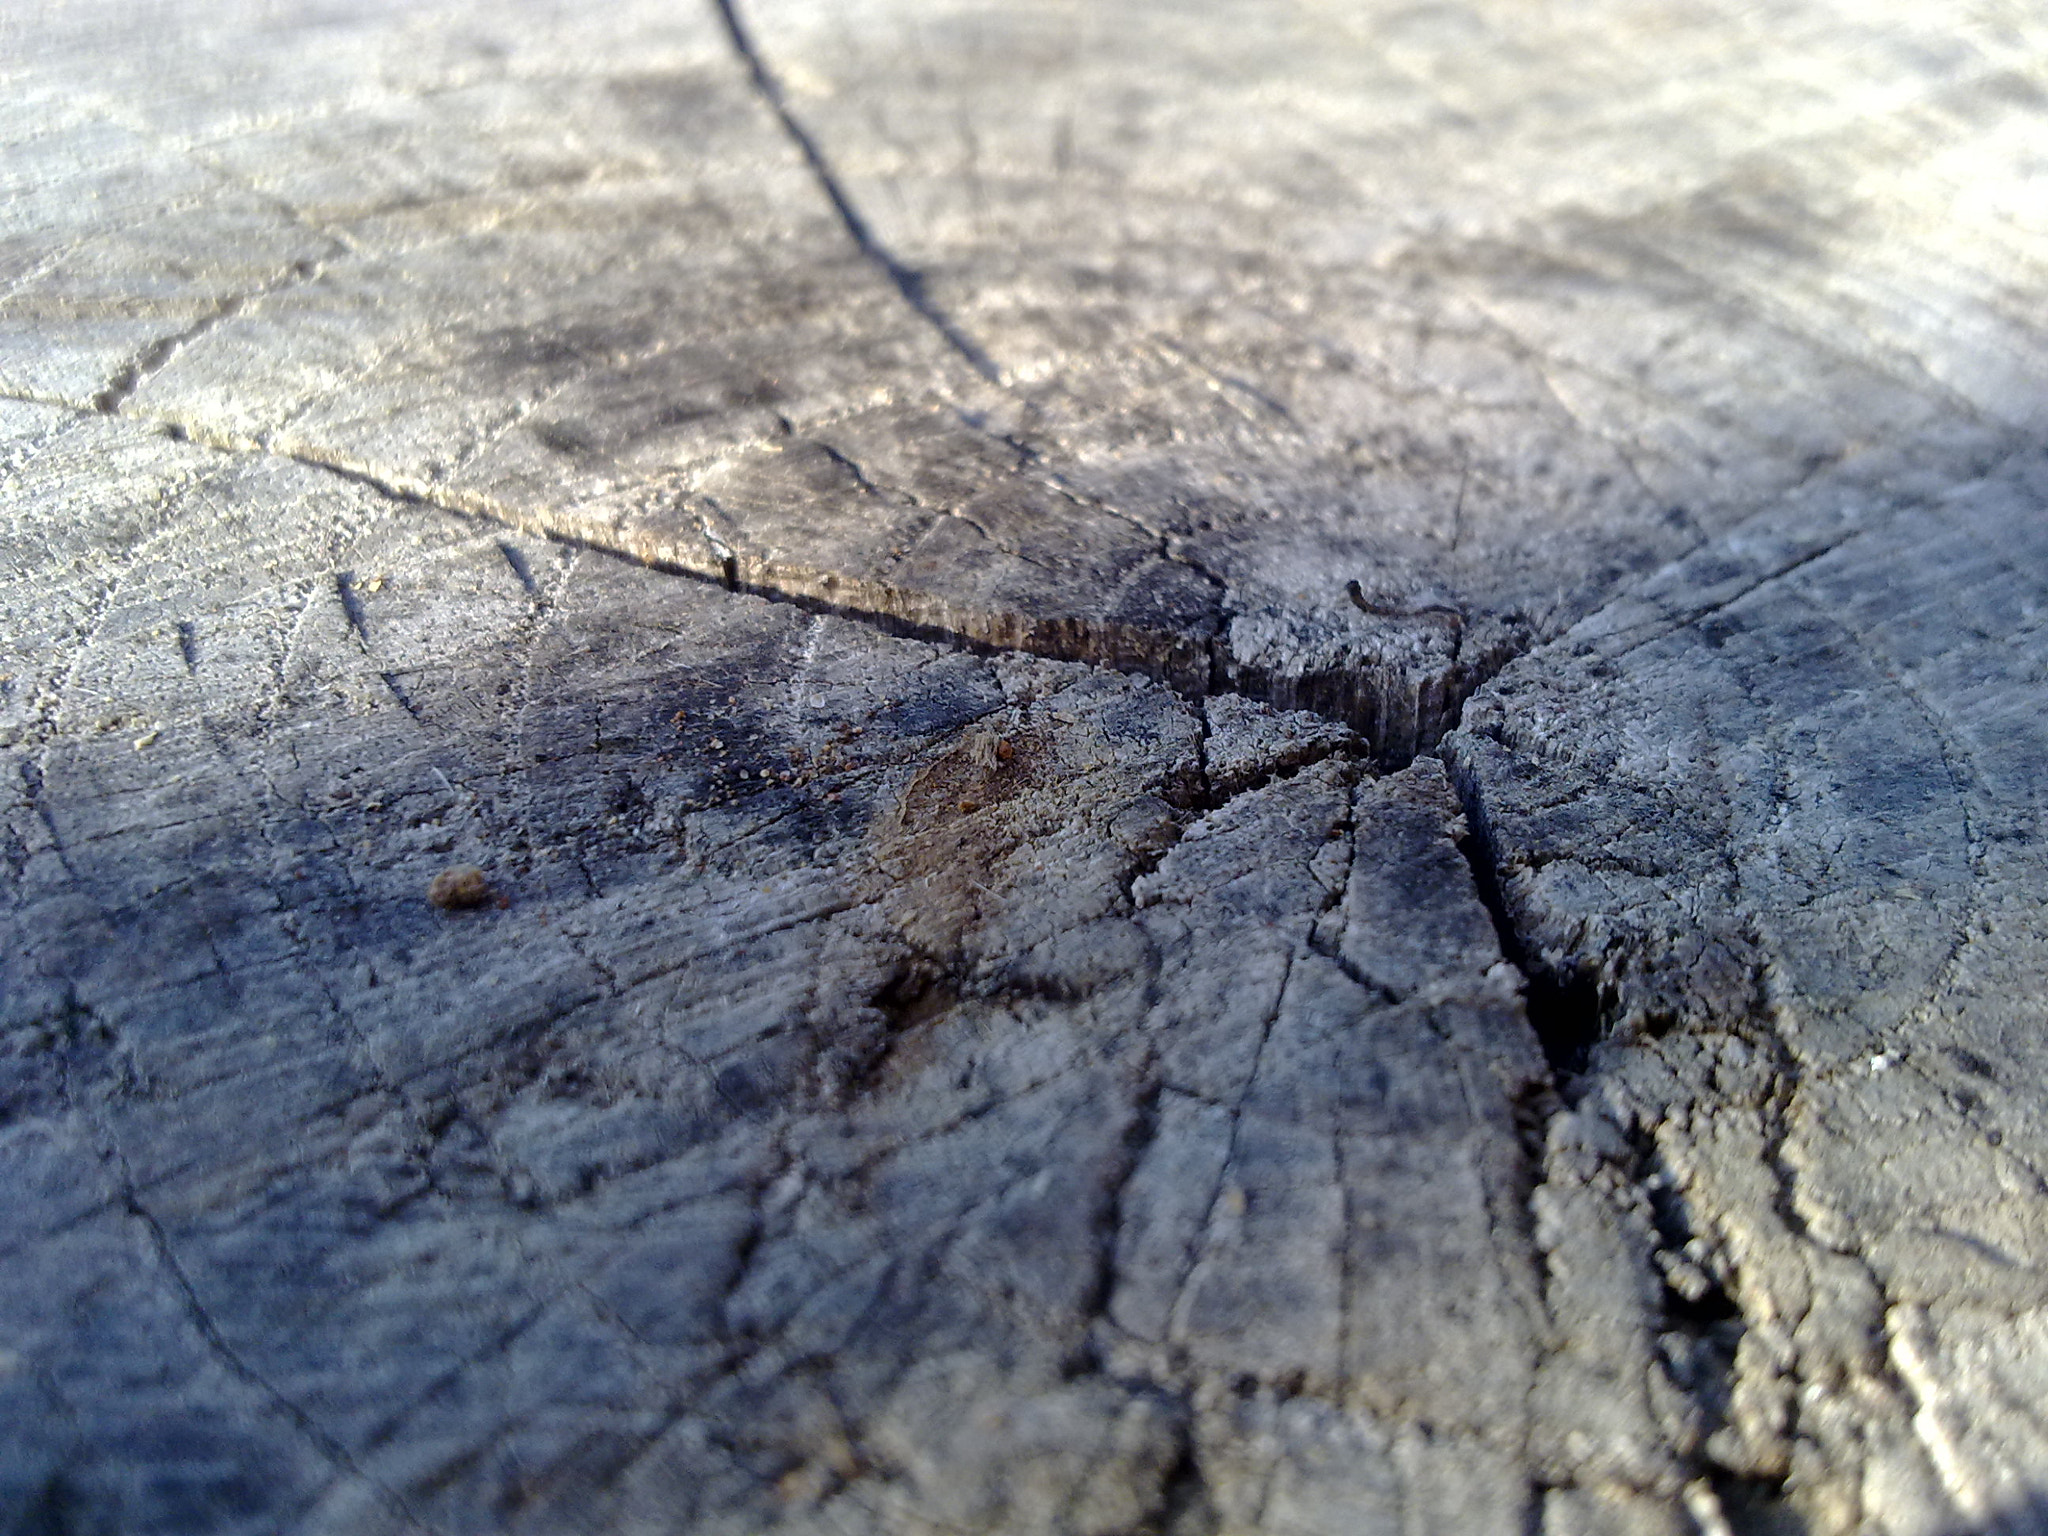 Nokia N97 mini sample photo. Tree substance photography